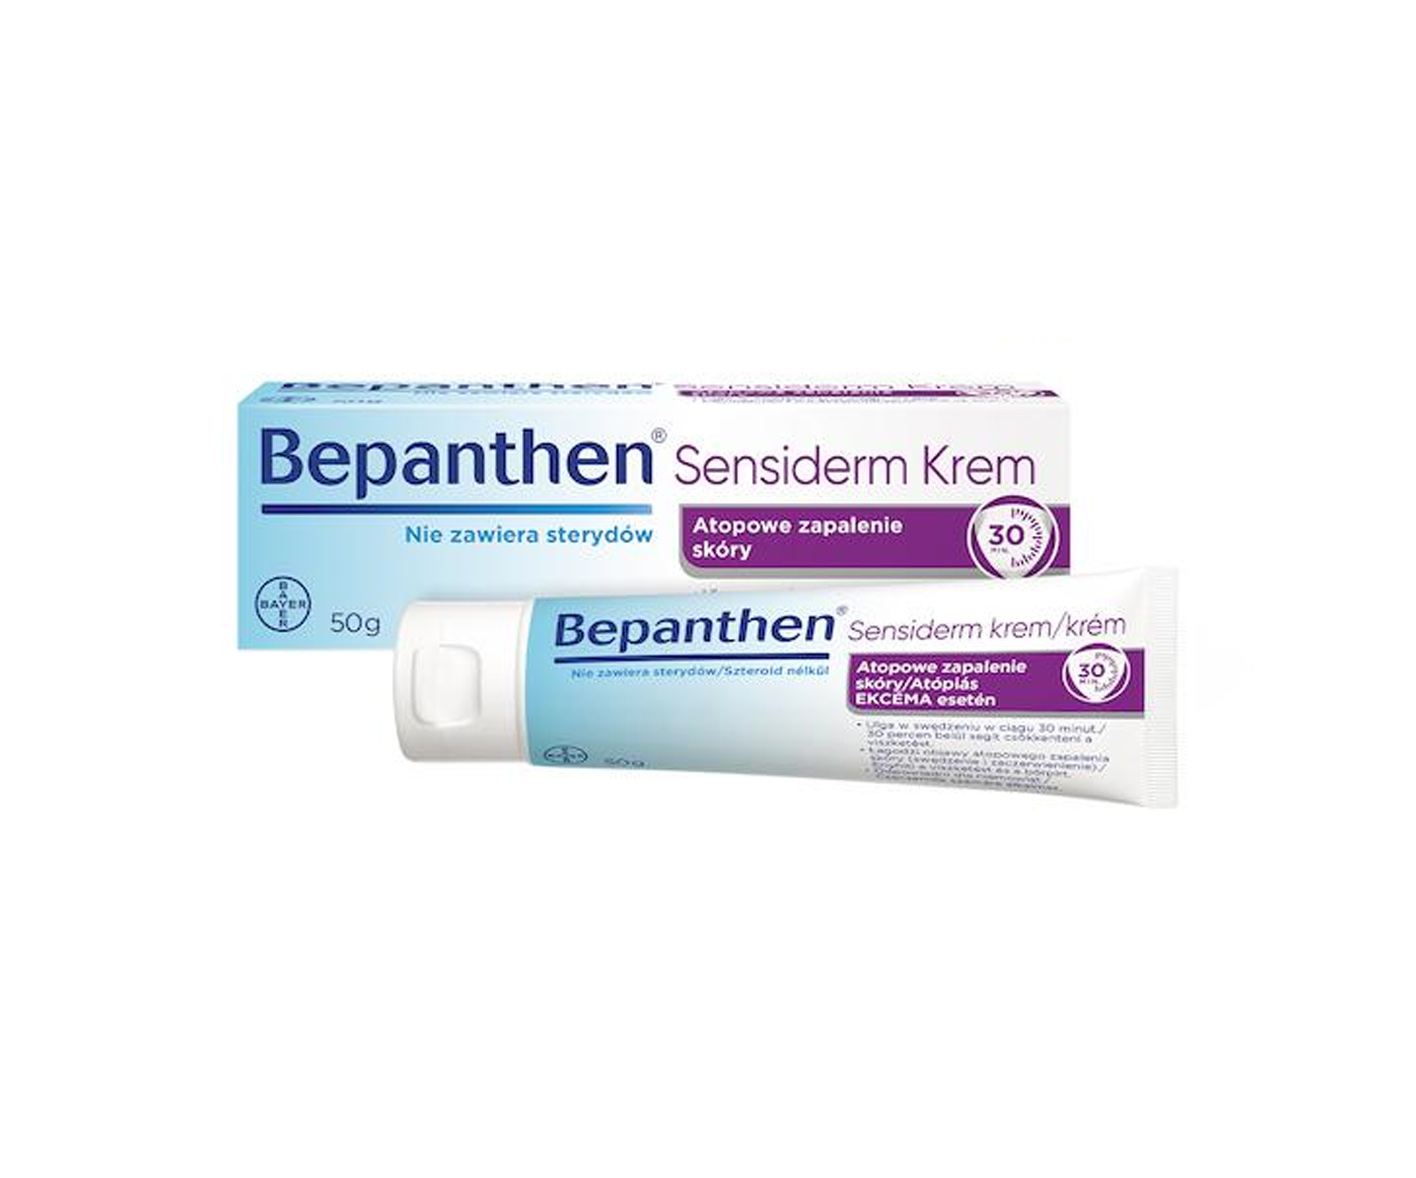 Bepanthen, Sensiderm, cream for skin irritations